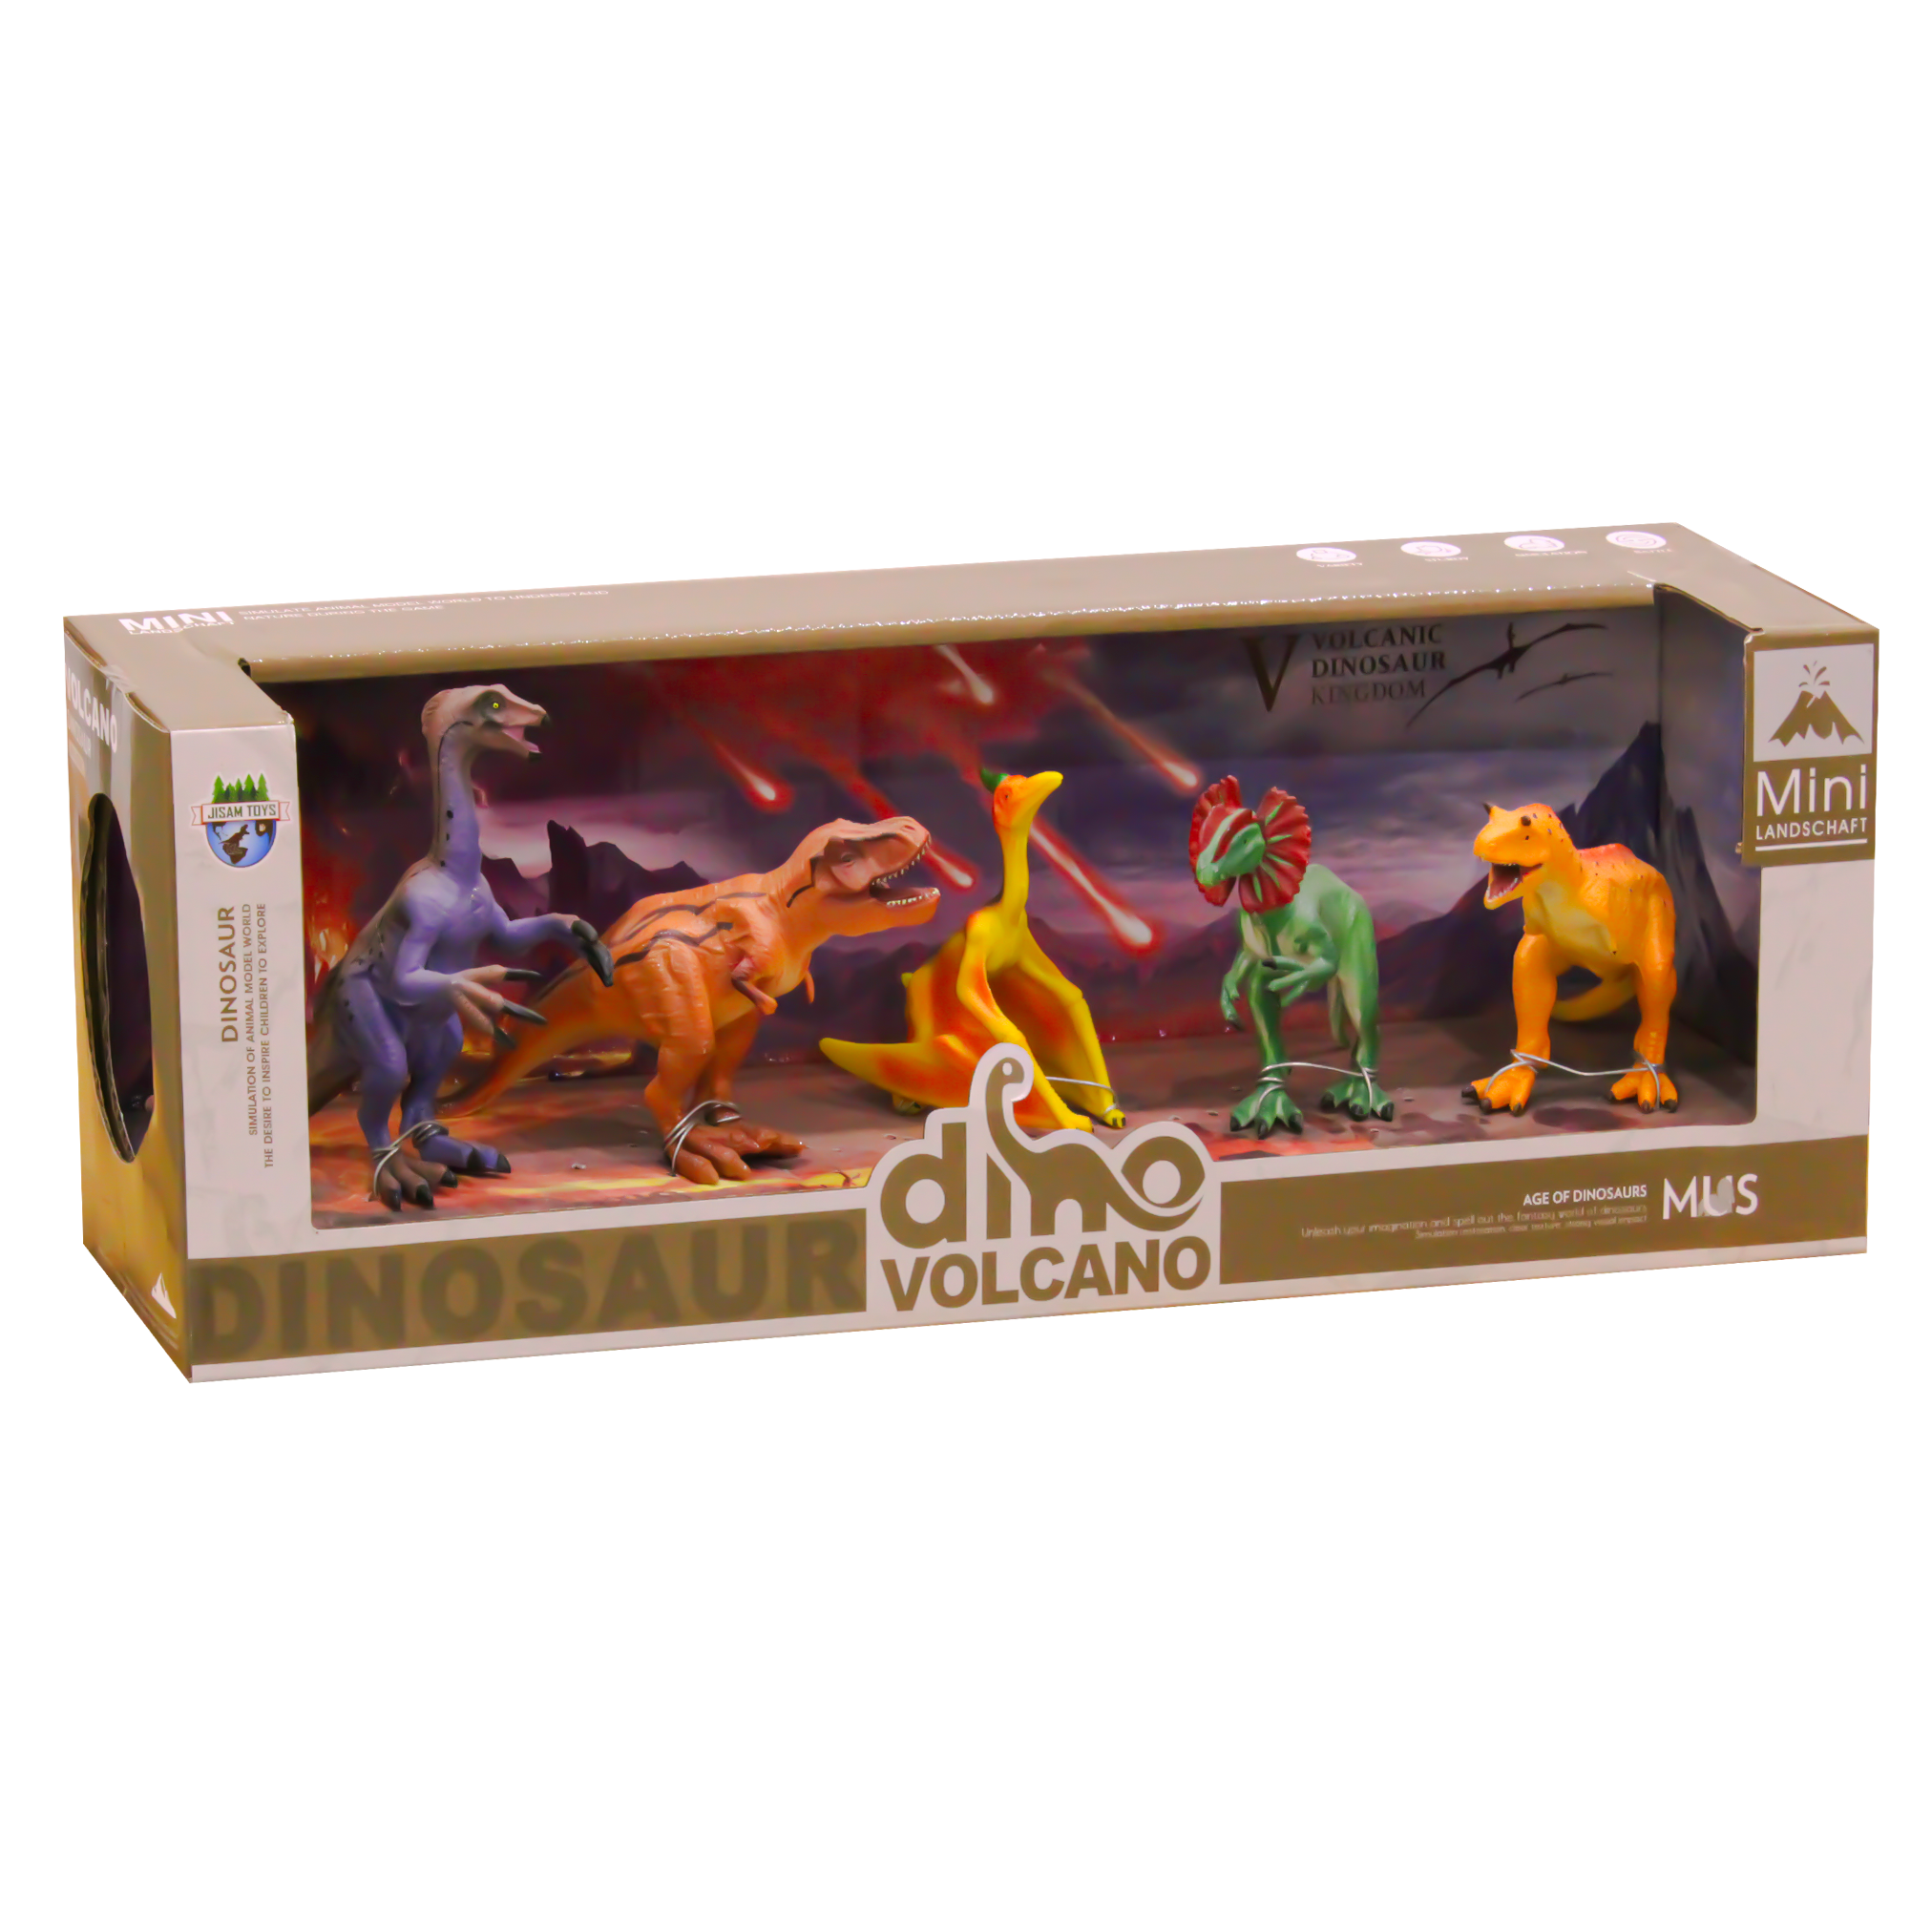 Mini Landschaft Dino Volcanic Dinosaurs Assorted 5 Figures Set E050-3 - Model B